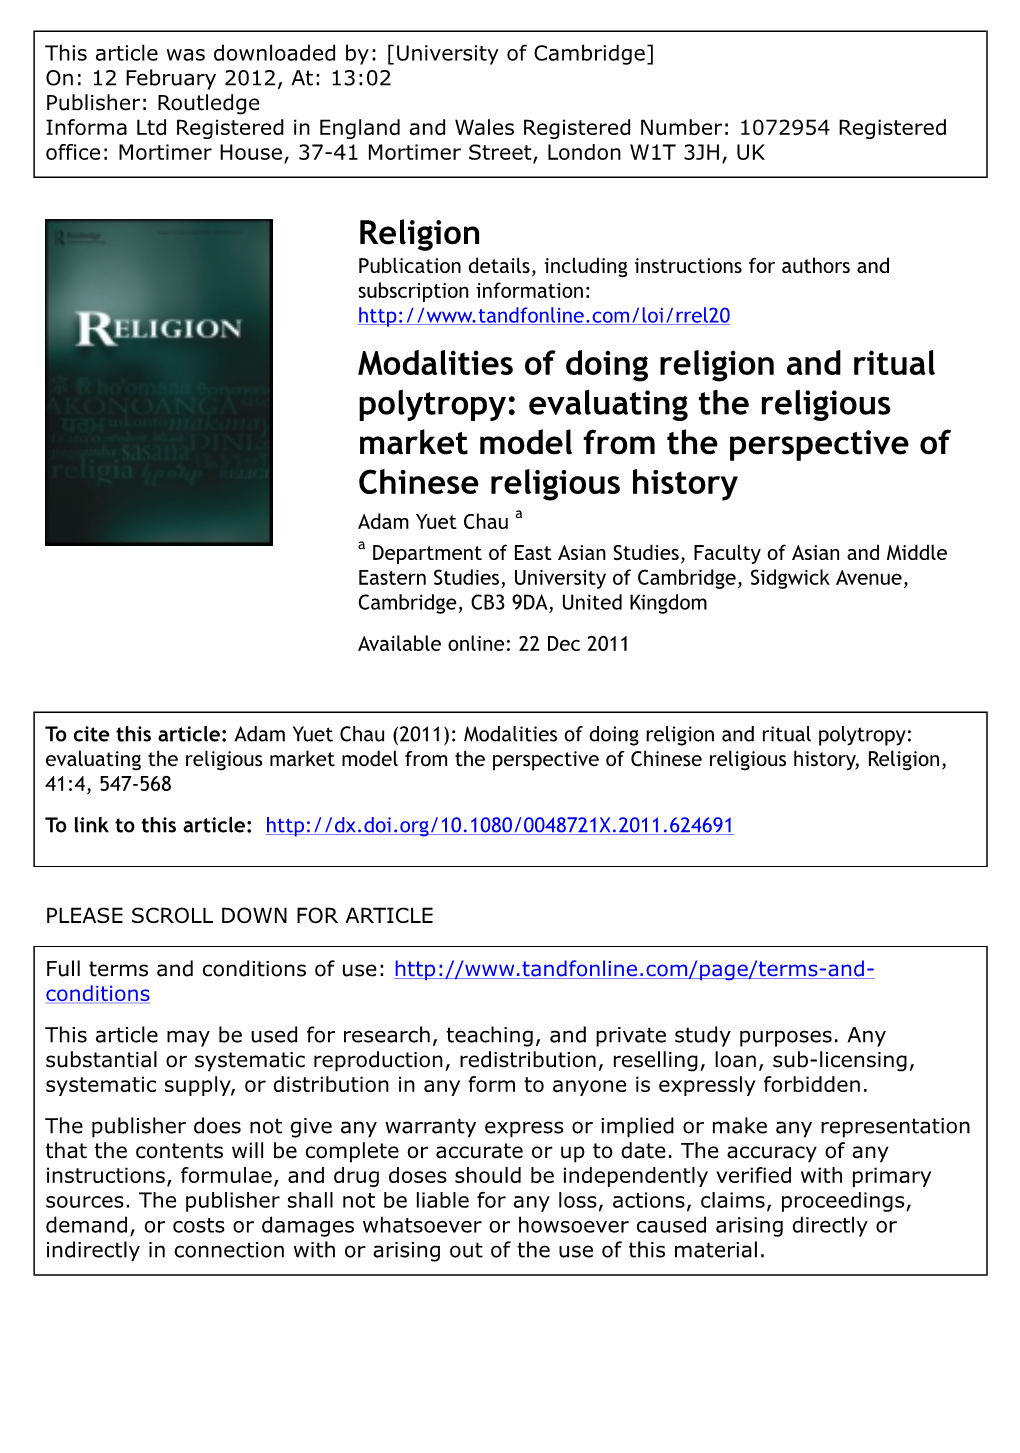 Modalities of Doing Religion and Ritual Polytropy: Evaluating the Religious